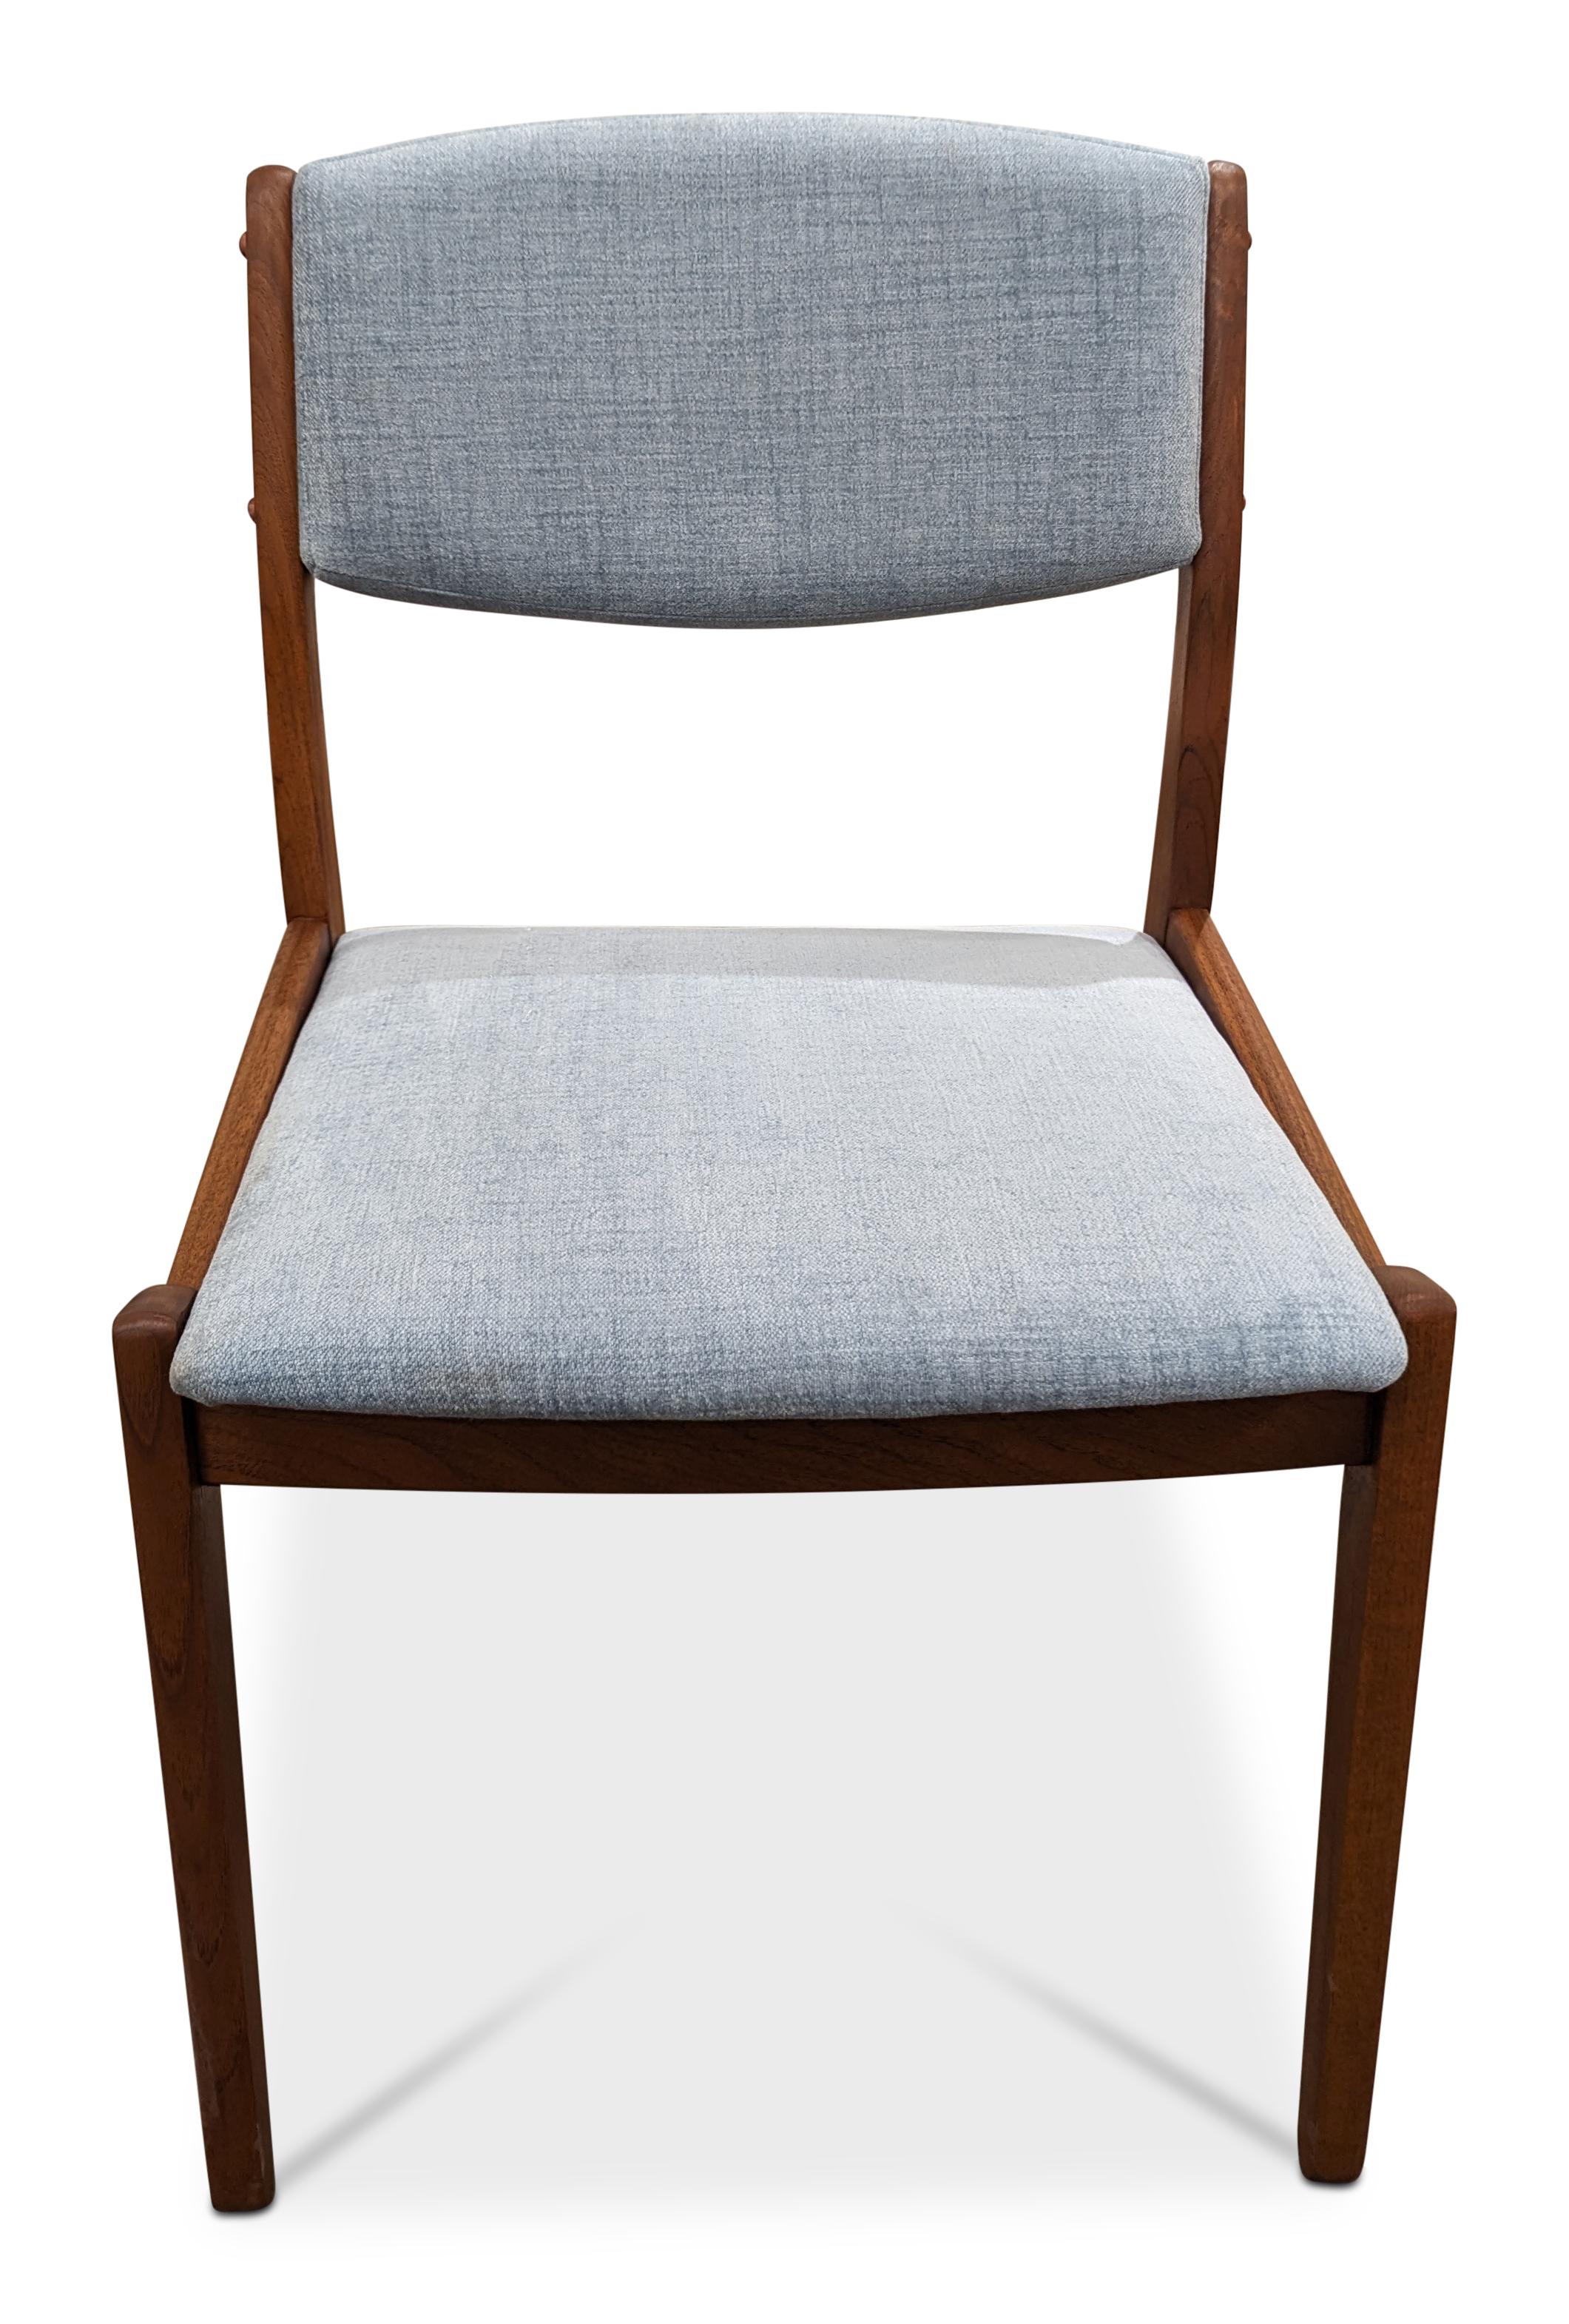 6 Orum Mobelfabrik Dining Chairs - 0224128 Vintage Danish Mid Century 1